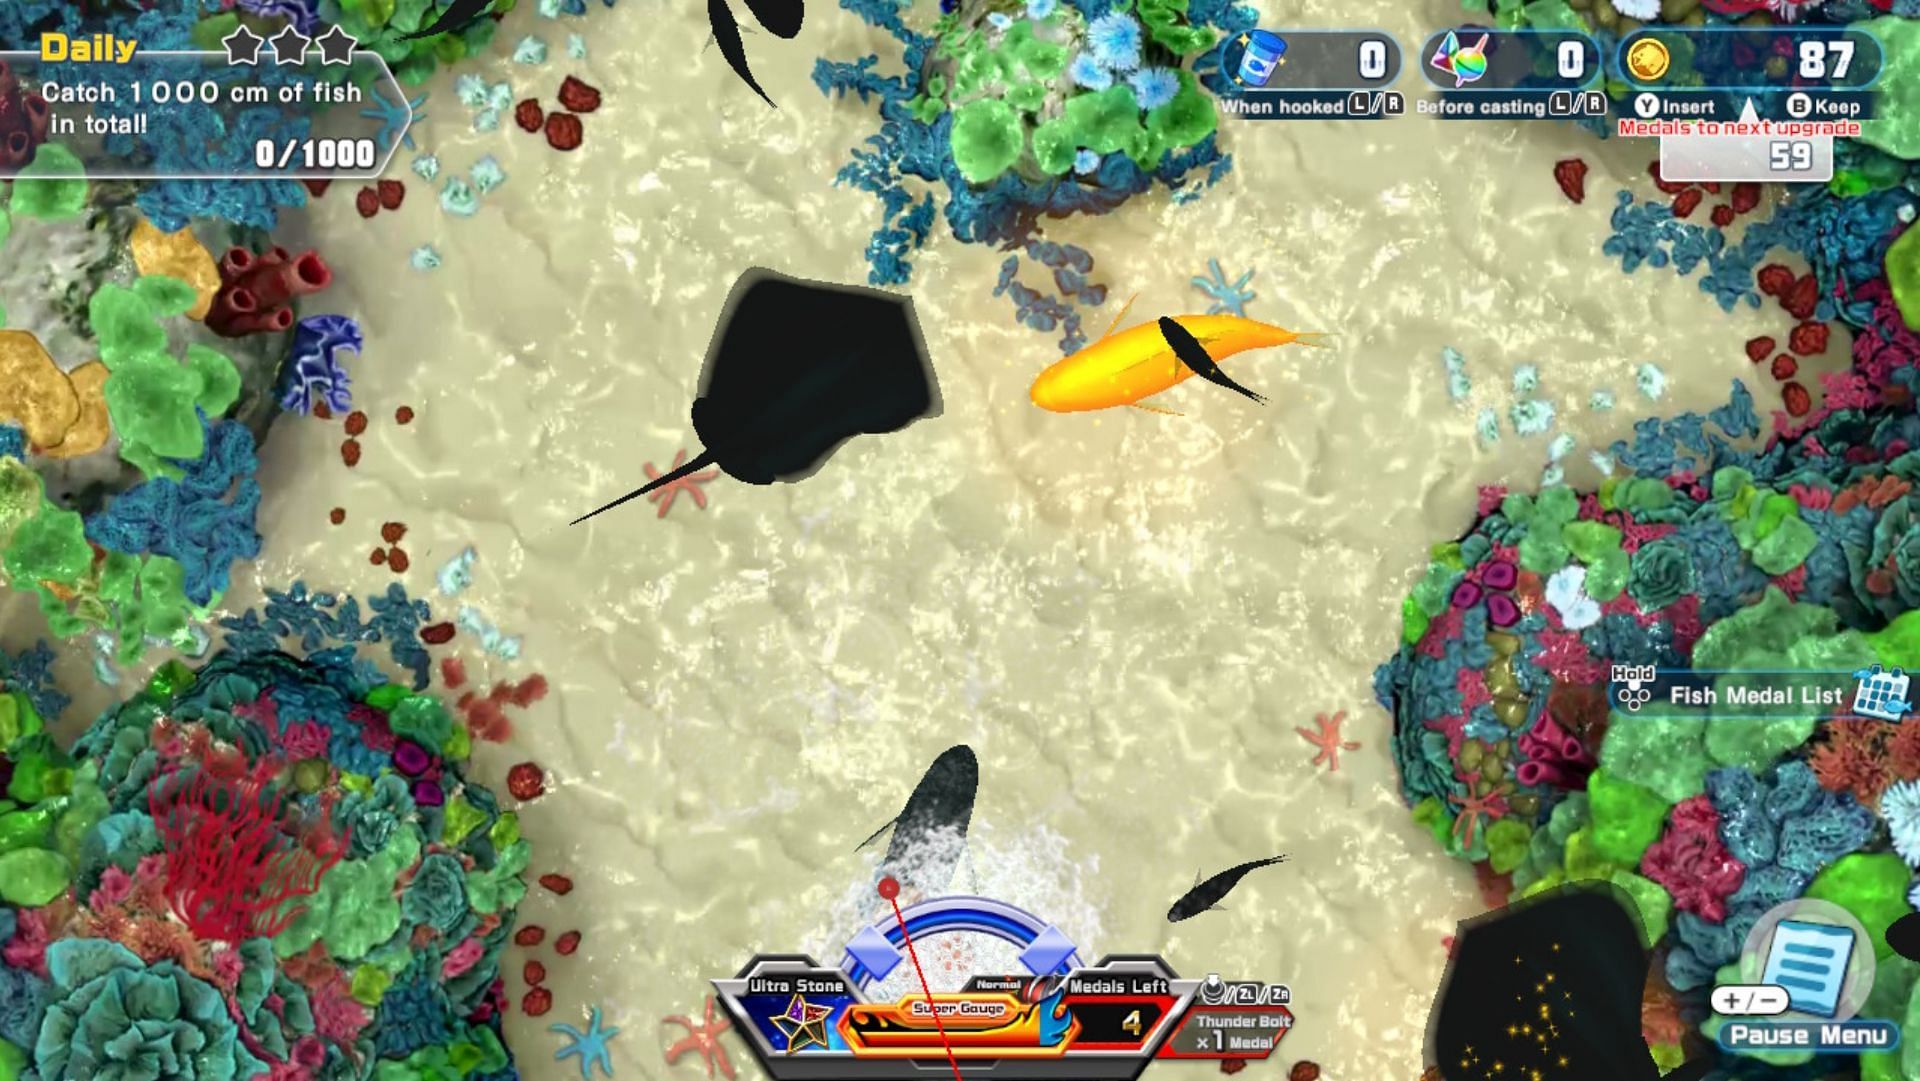 Ace Angler: Fishing Spirits review: An incredibly fun arcade fishing game